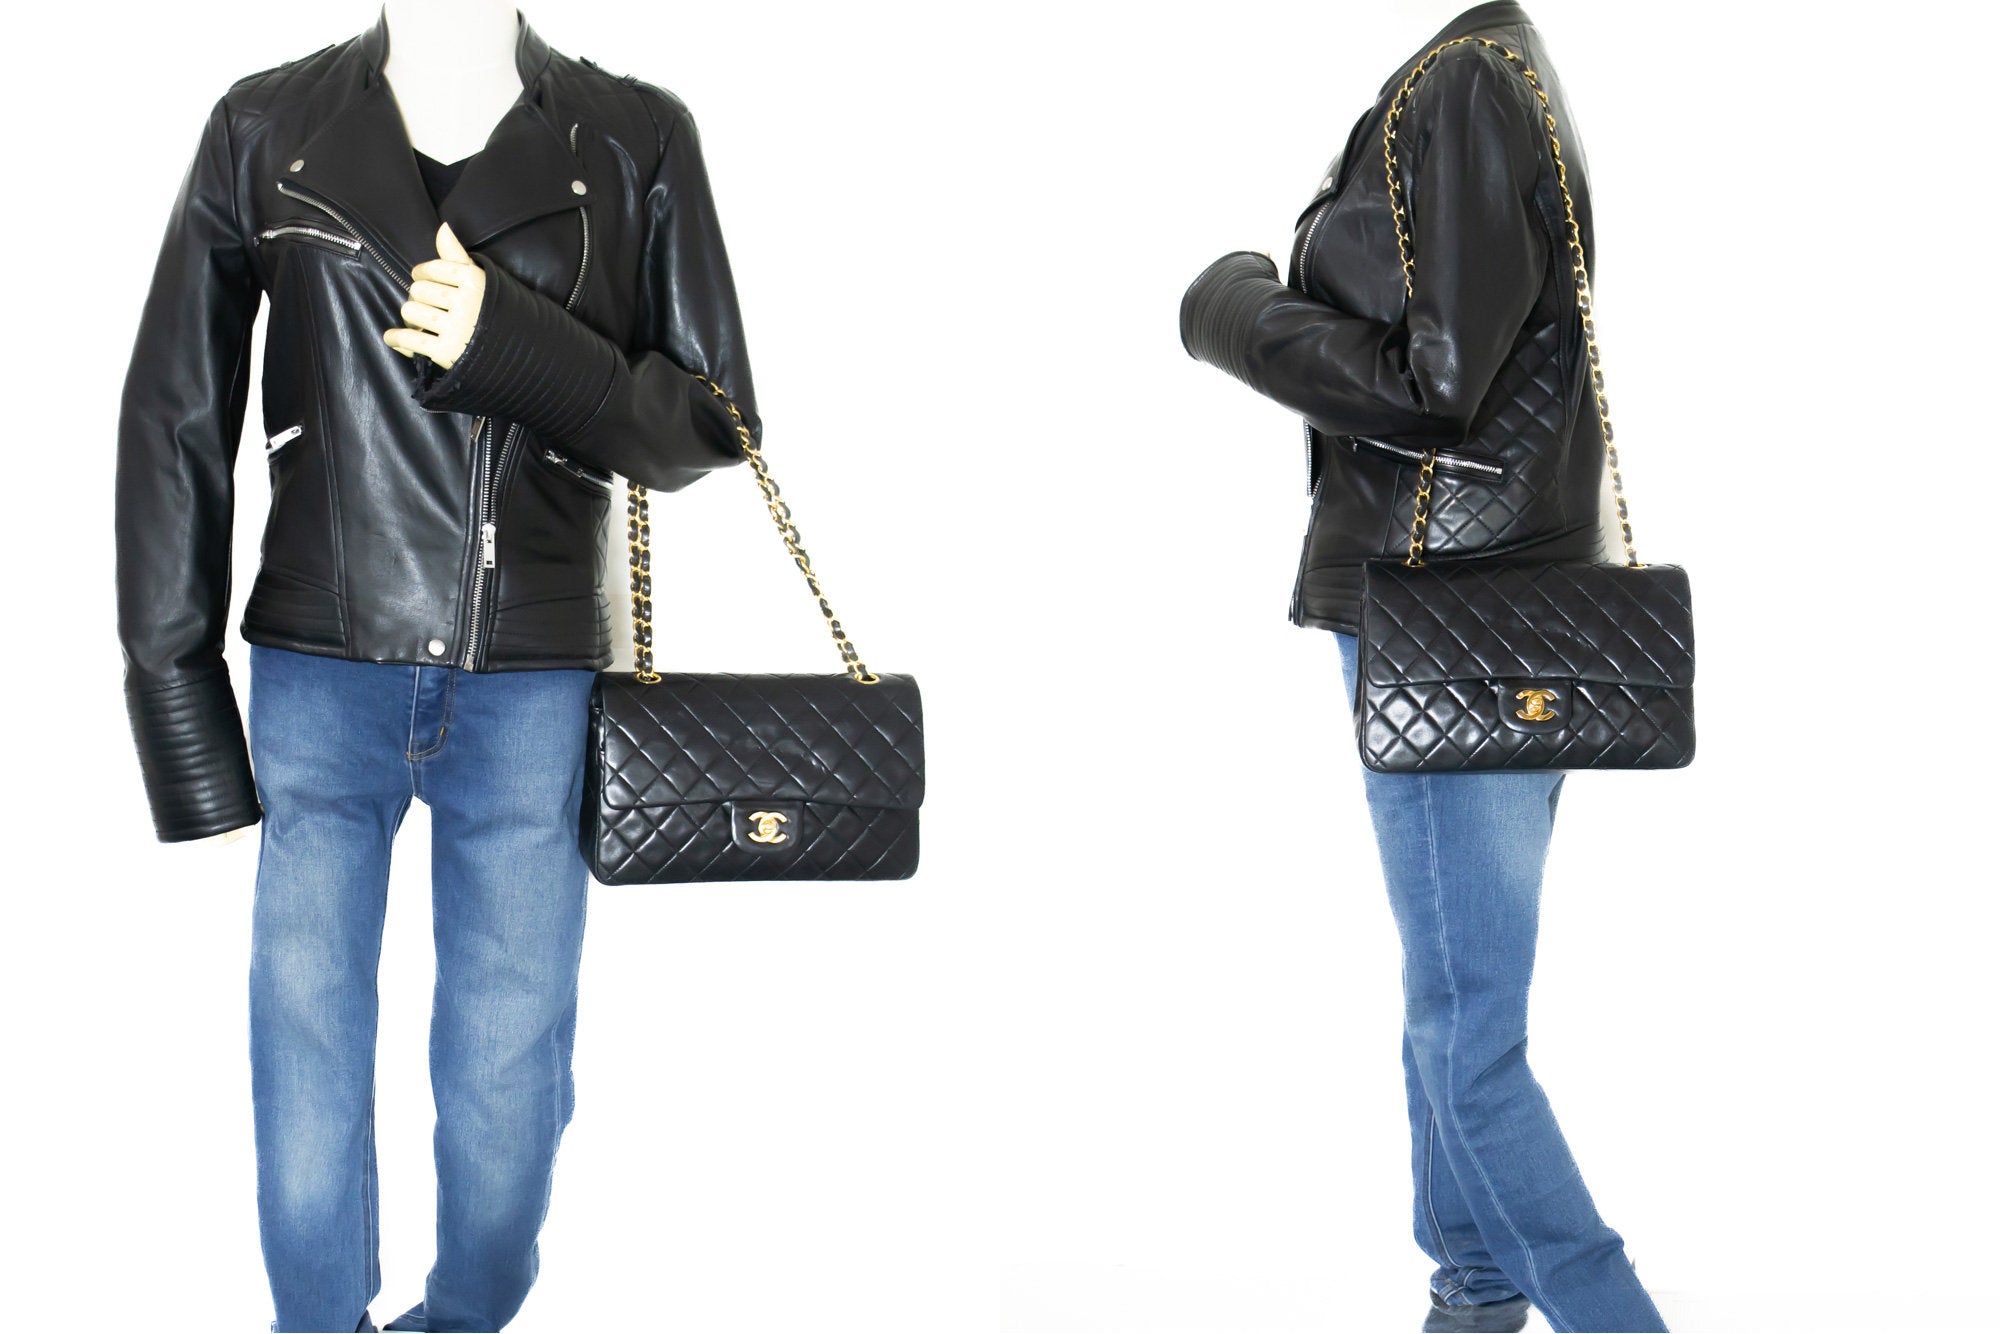 Chanel Classic Double Flap 10 Chain Shoulder Bag Black Lambskin K49